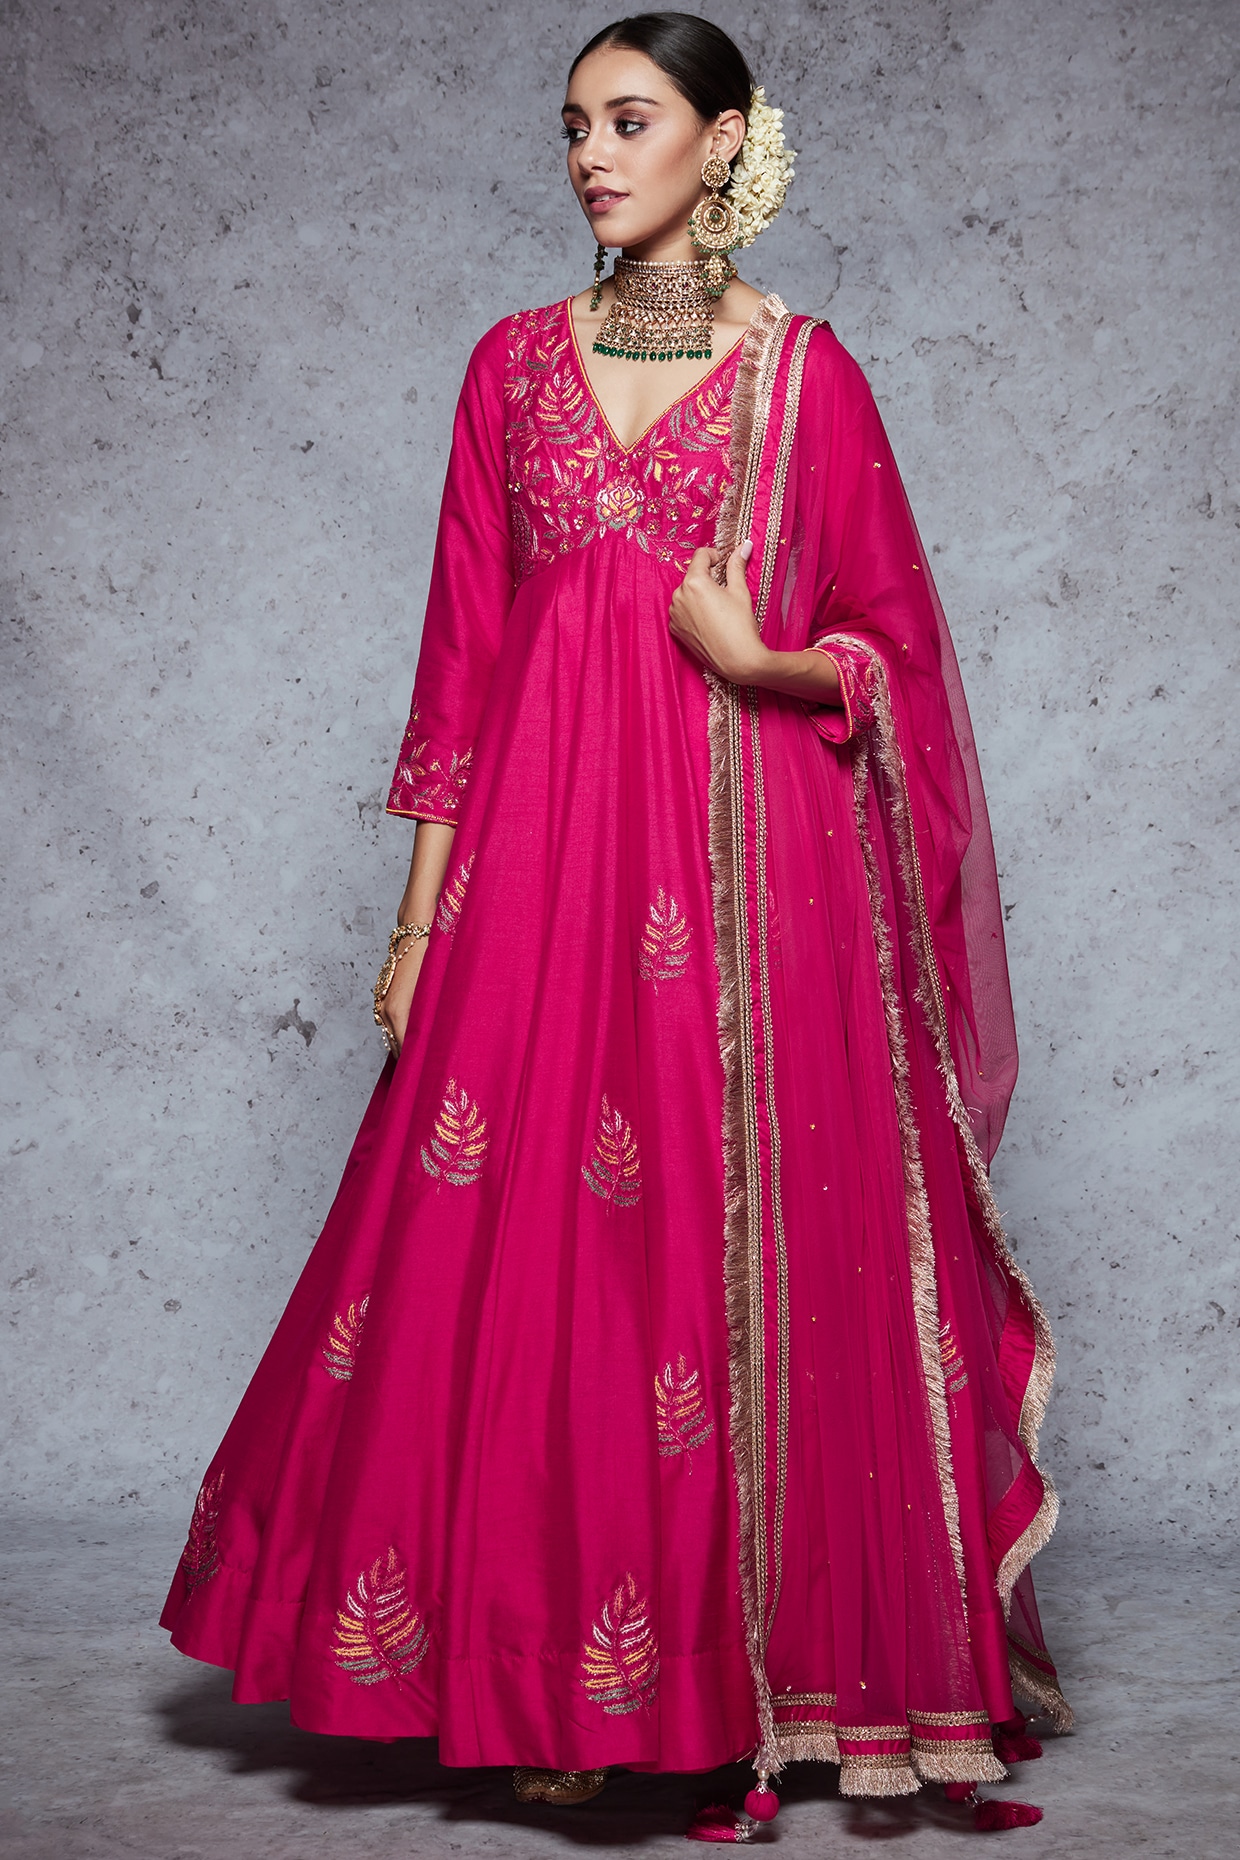 Pakistani Eid New Wedding Indian Bridal Anarkali Suit Dress Bollywood Party  Gown | eBay